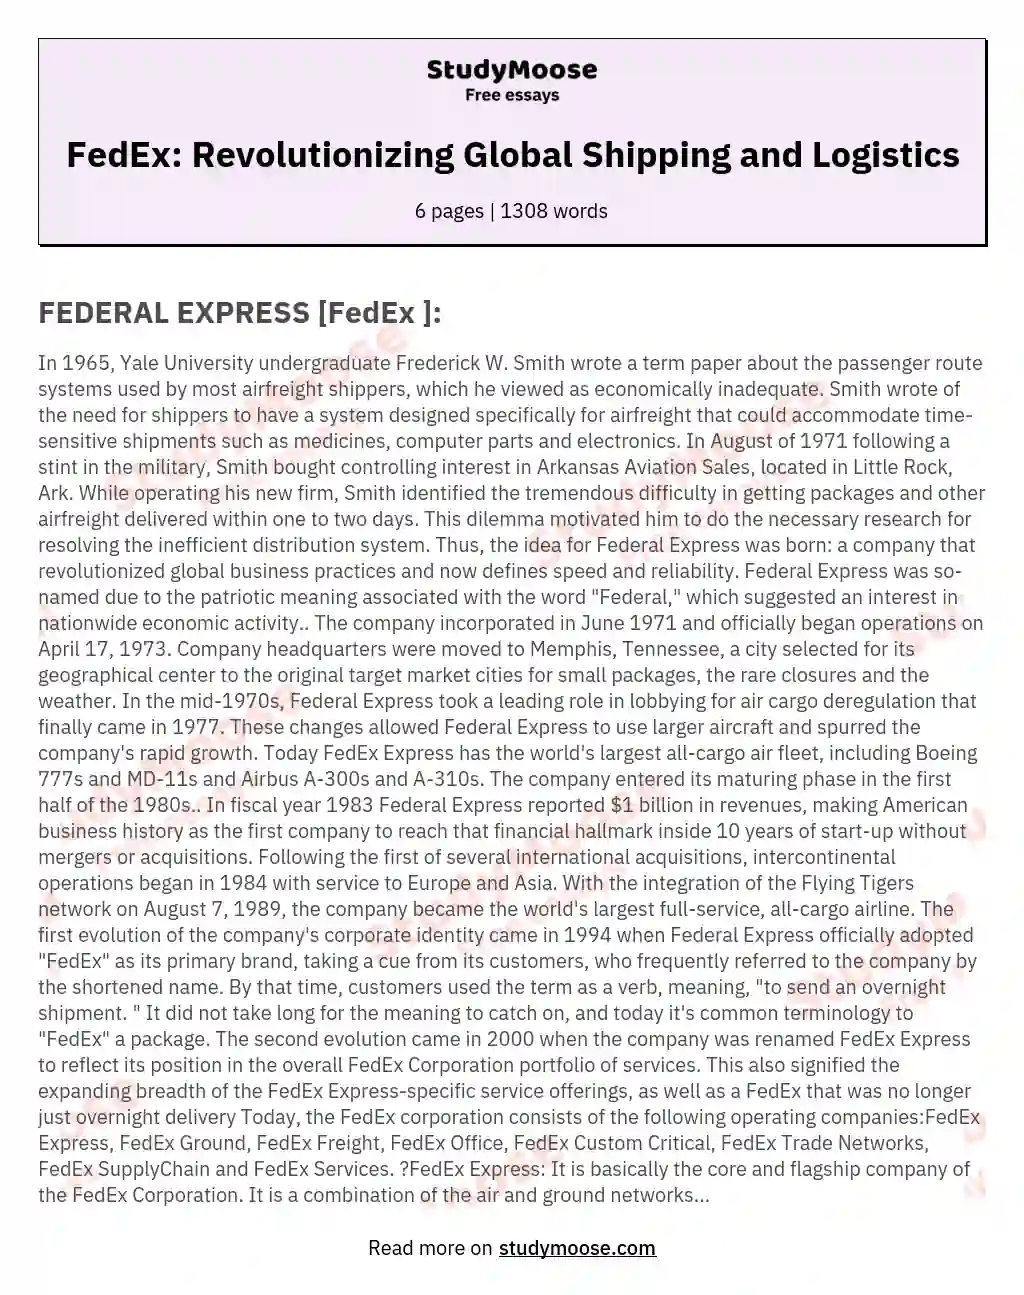 FedEx: Revolutionizing Global Shipping and Logistics essay